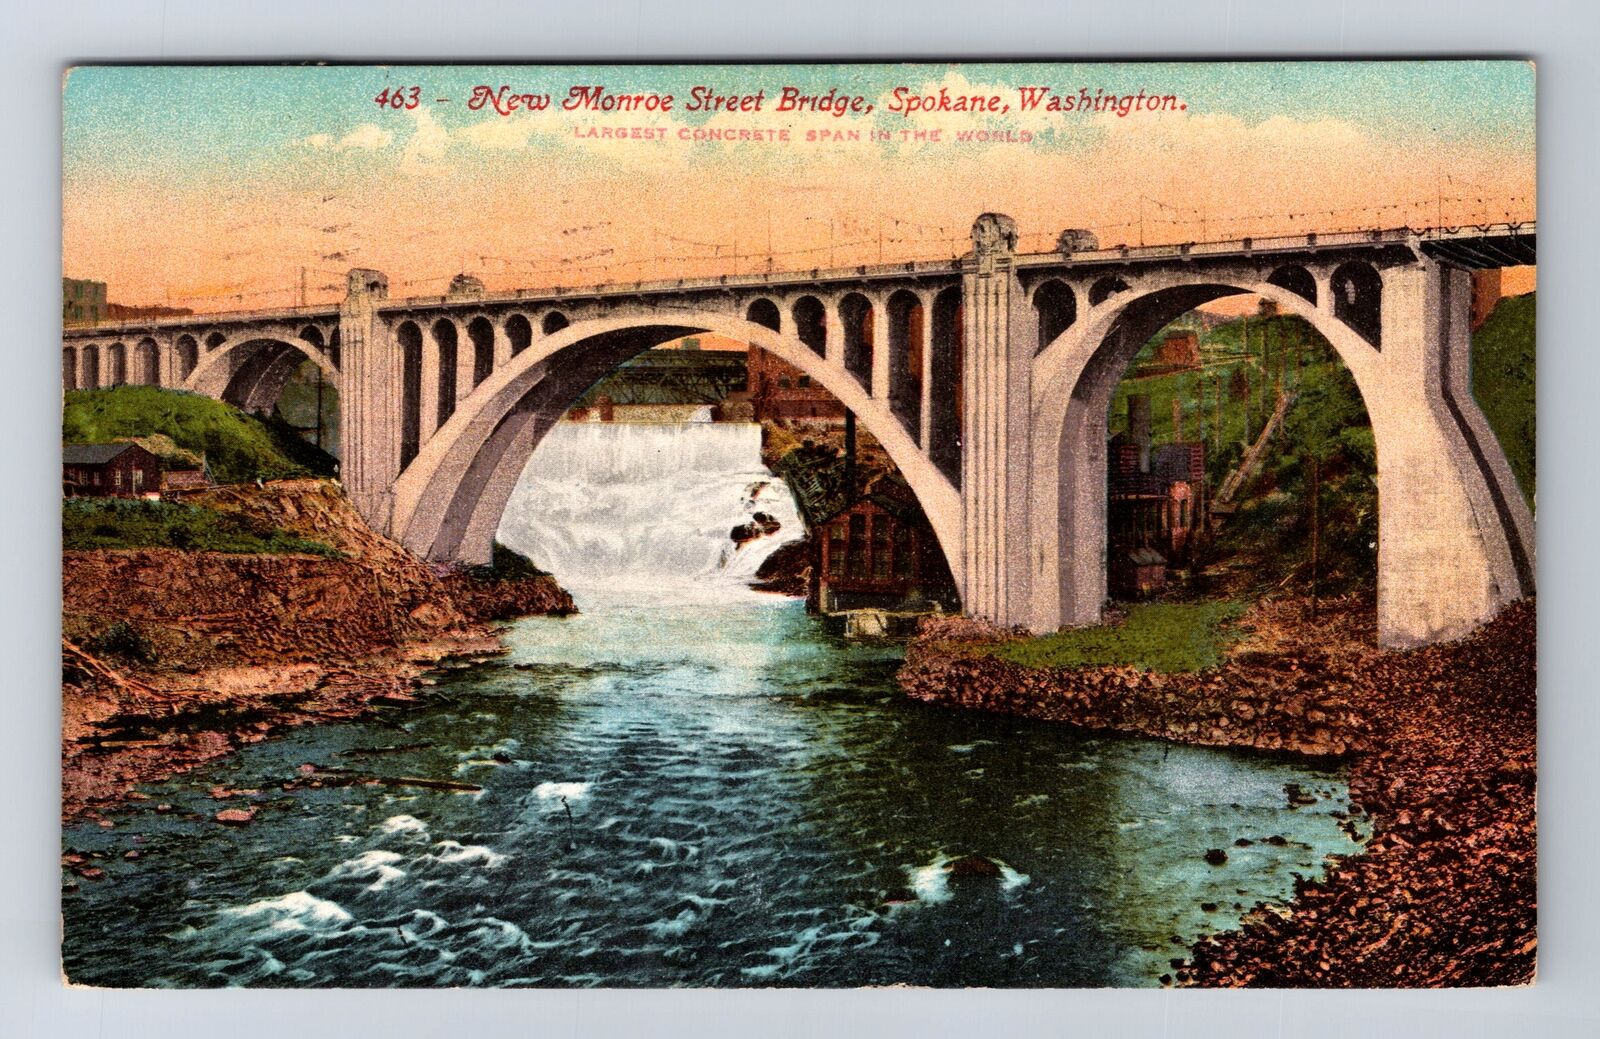 Spokane WA-Washington, New Monroe Street Bridge, Vintage Souvenir c1912 Postcard